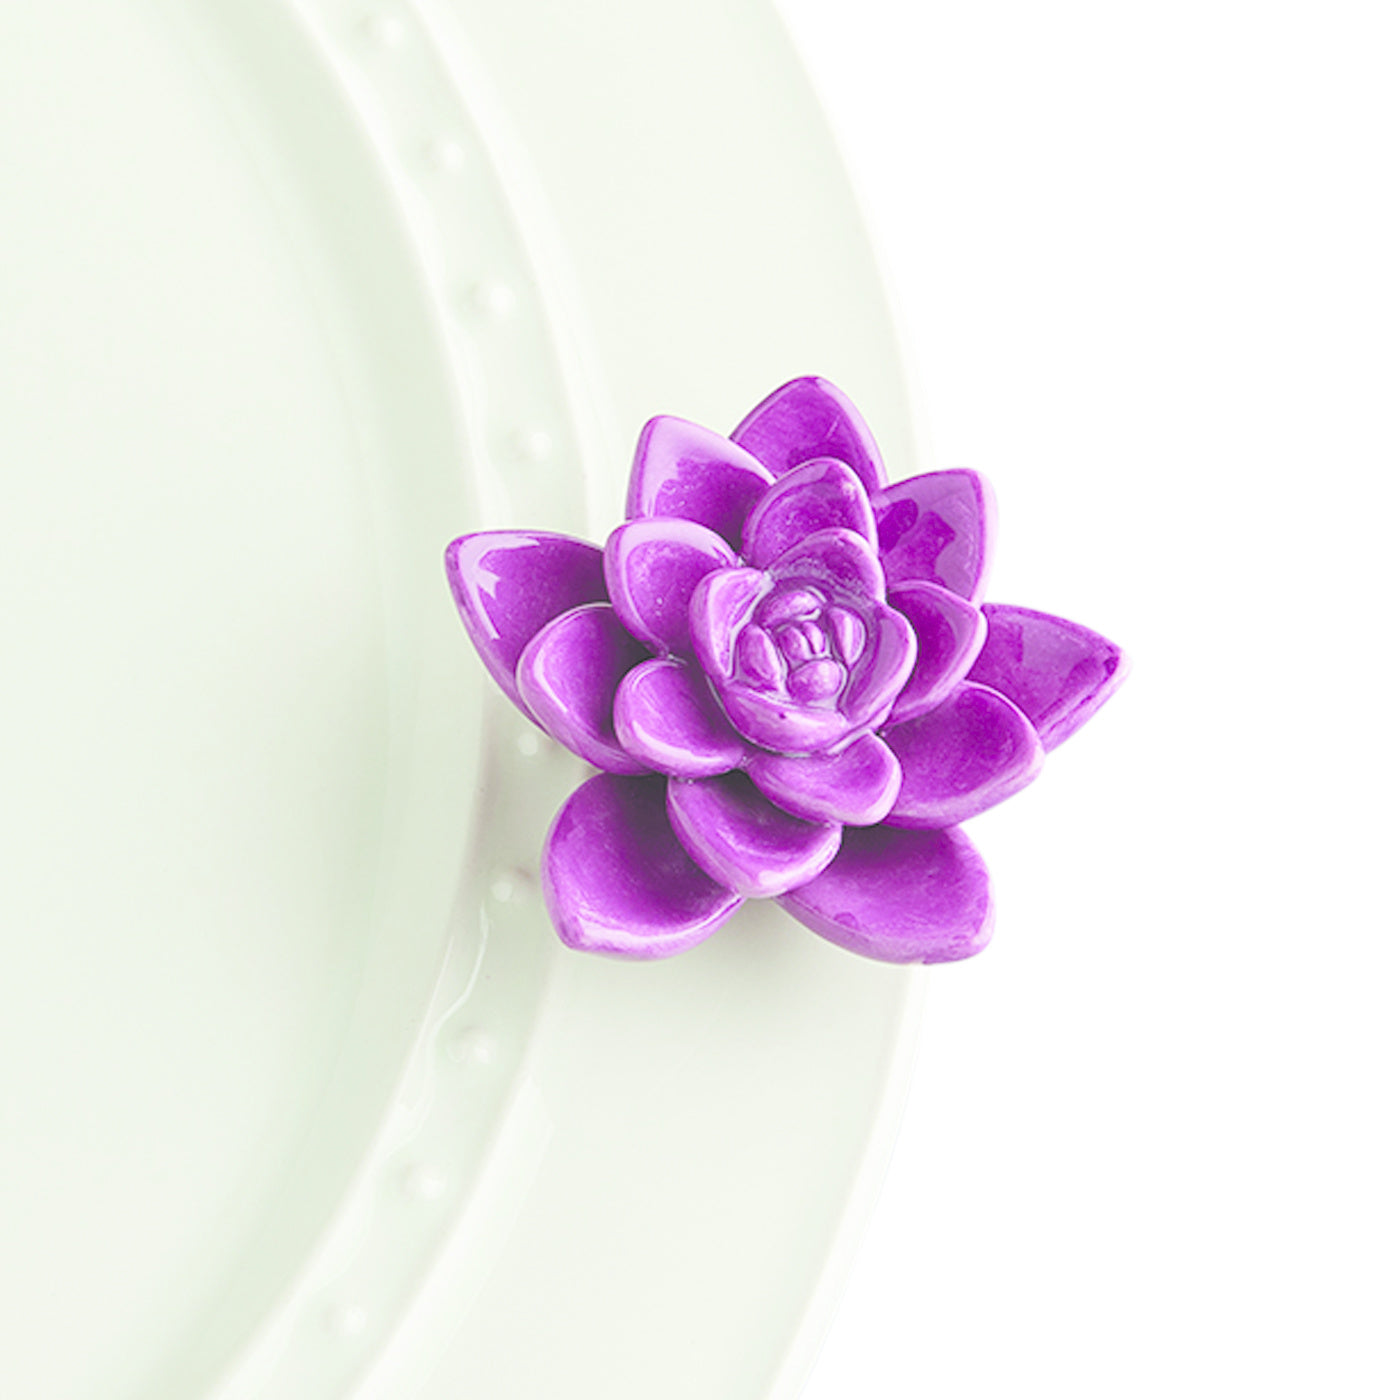 Get Growing, Purple Flower Mini